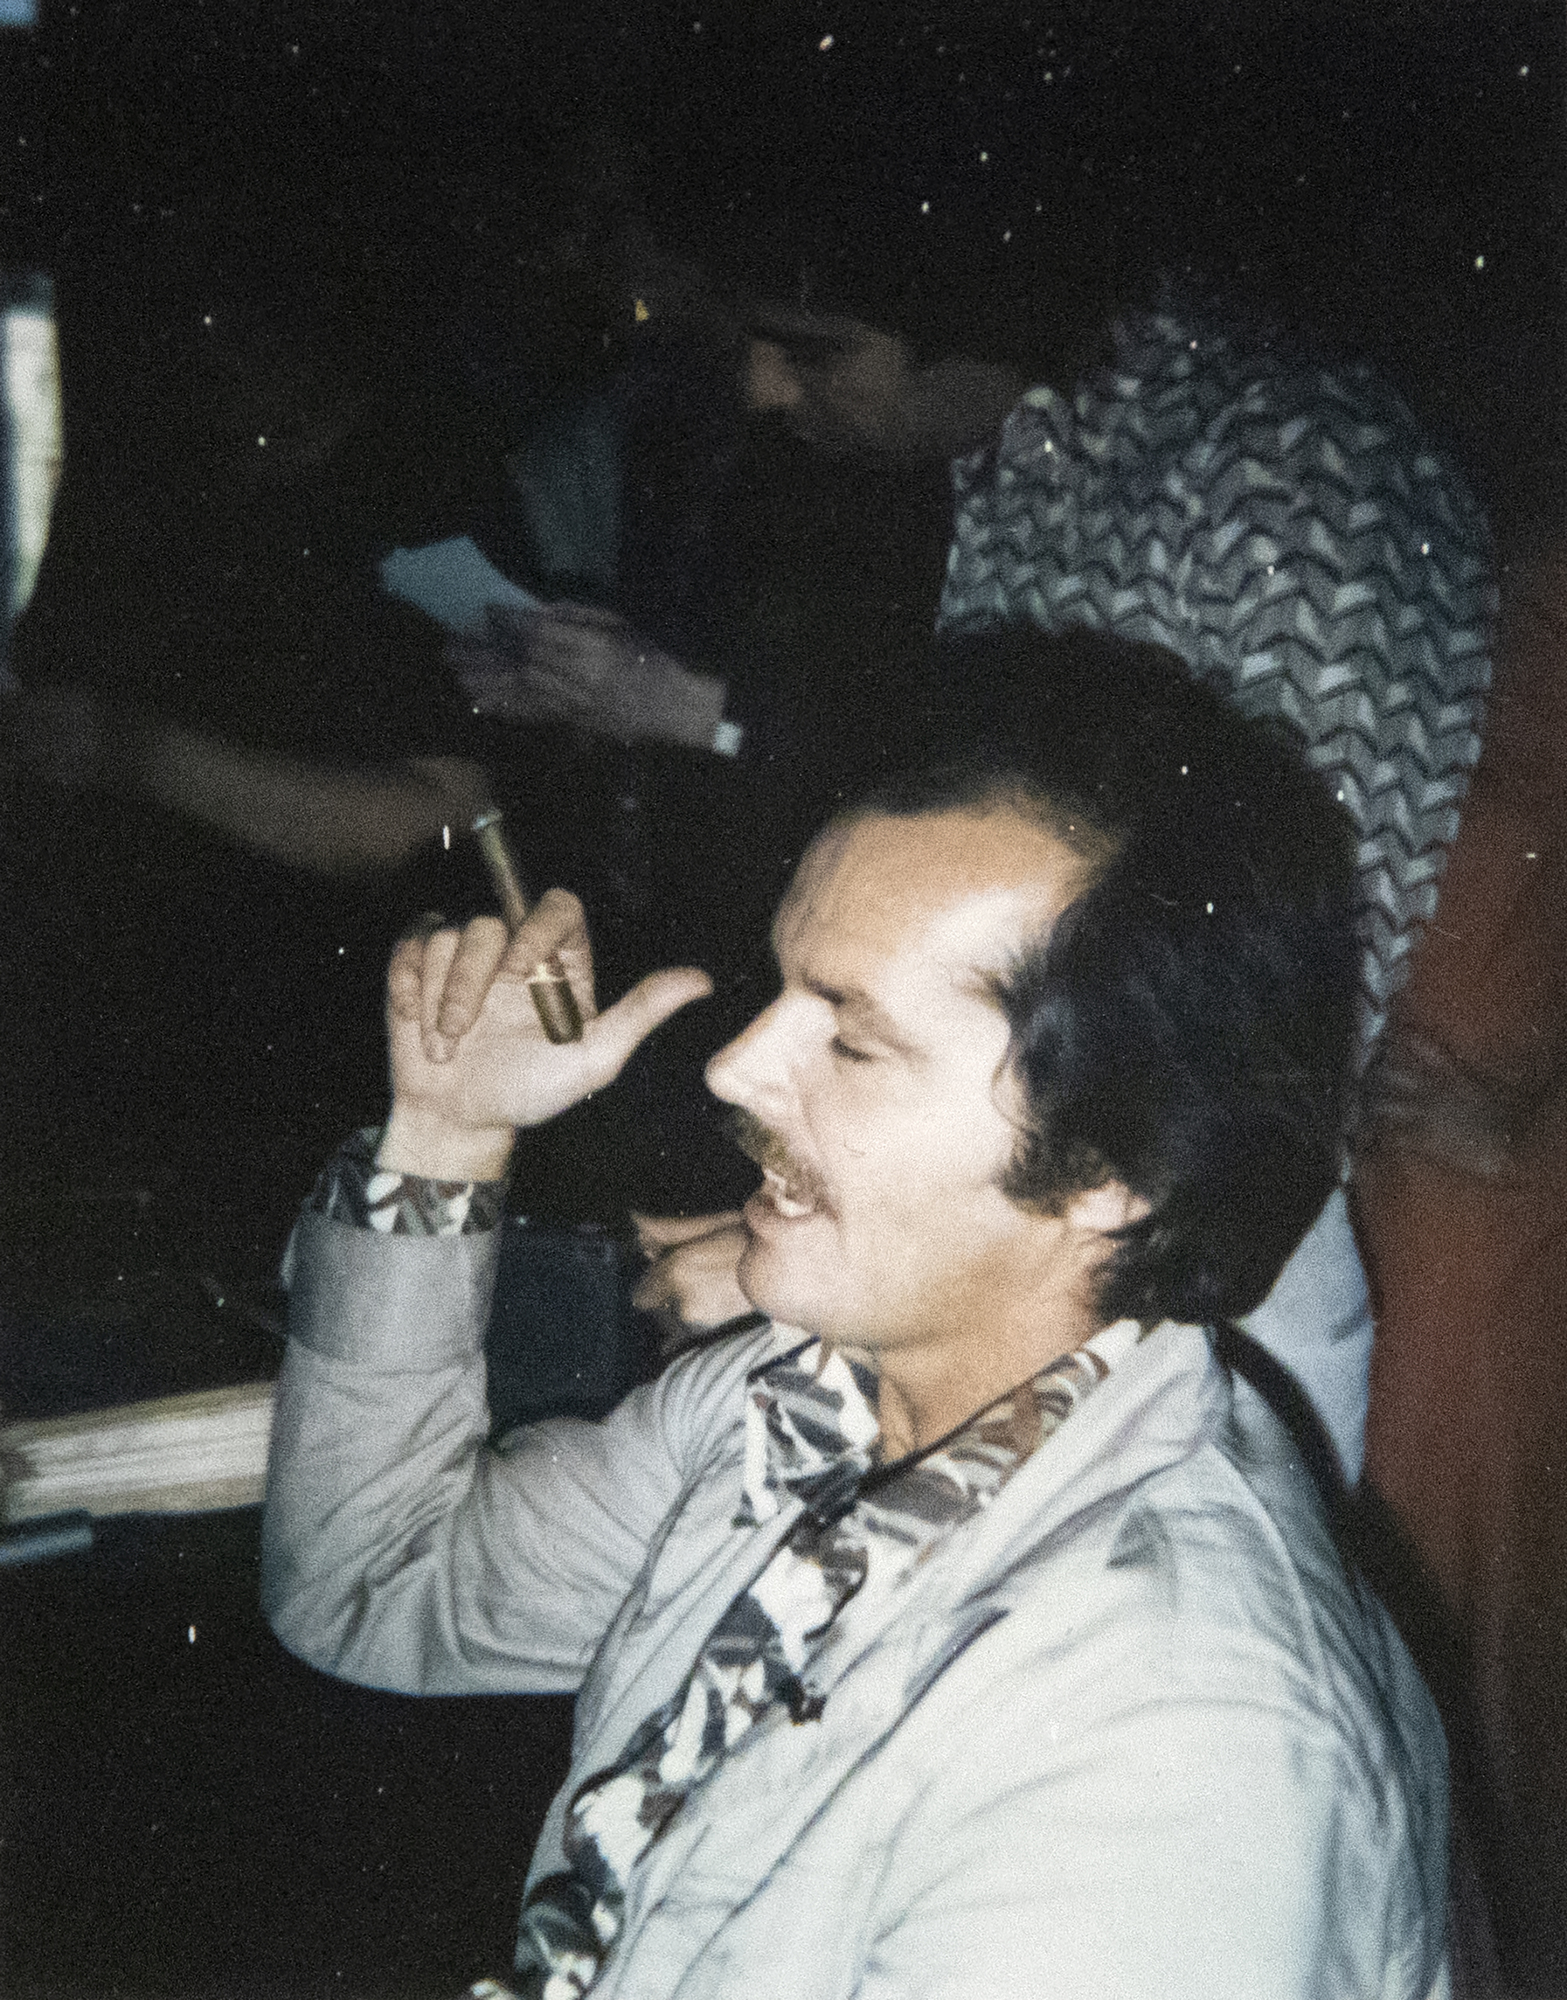 ANDY WARHOL - Jack Nicholson - Polaroid, Polacolor - 4 1/4 x 3 3/8 in.